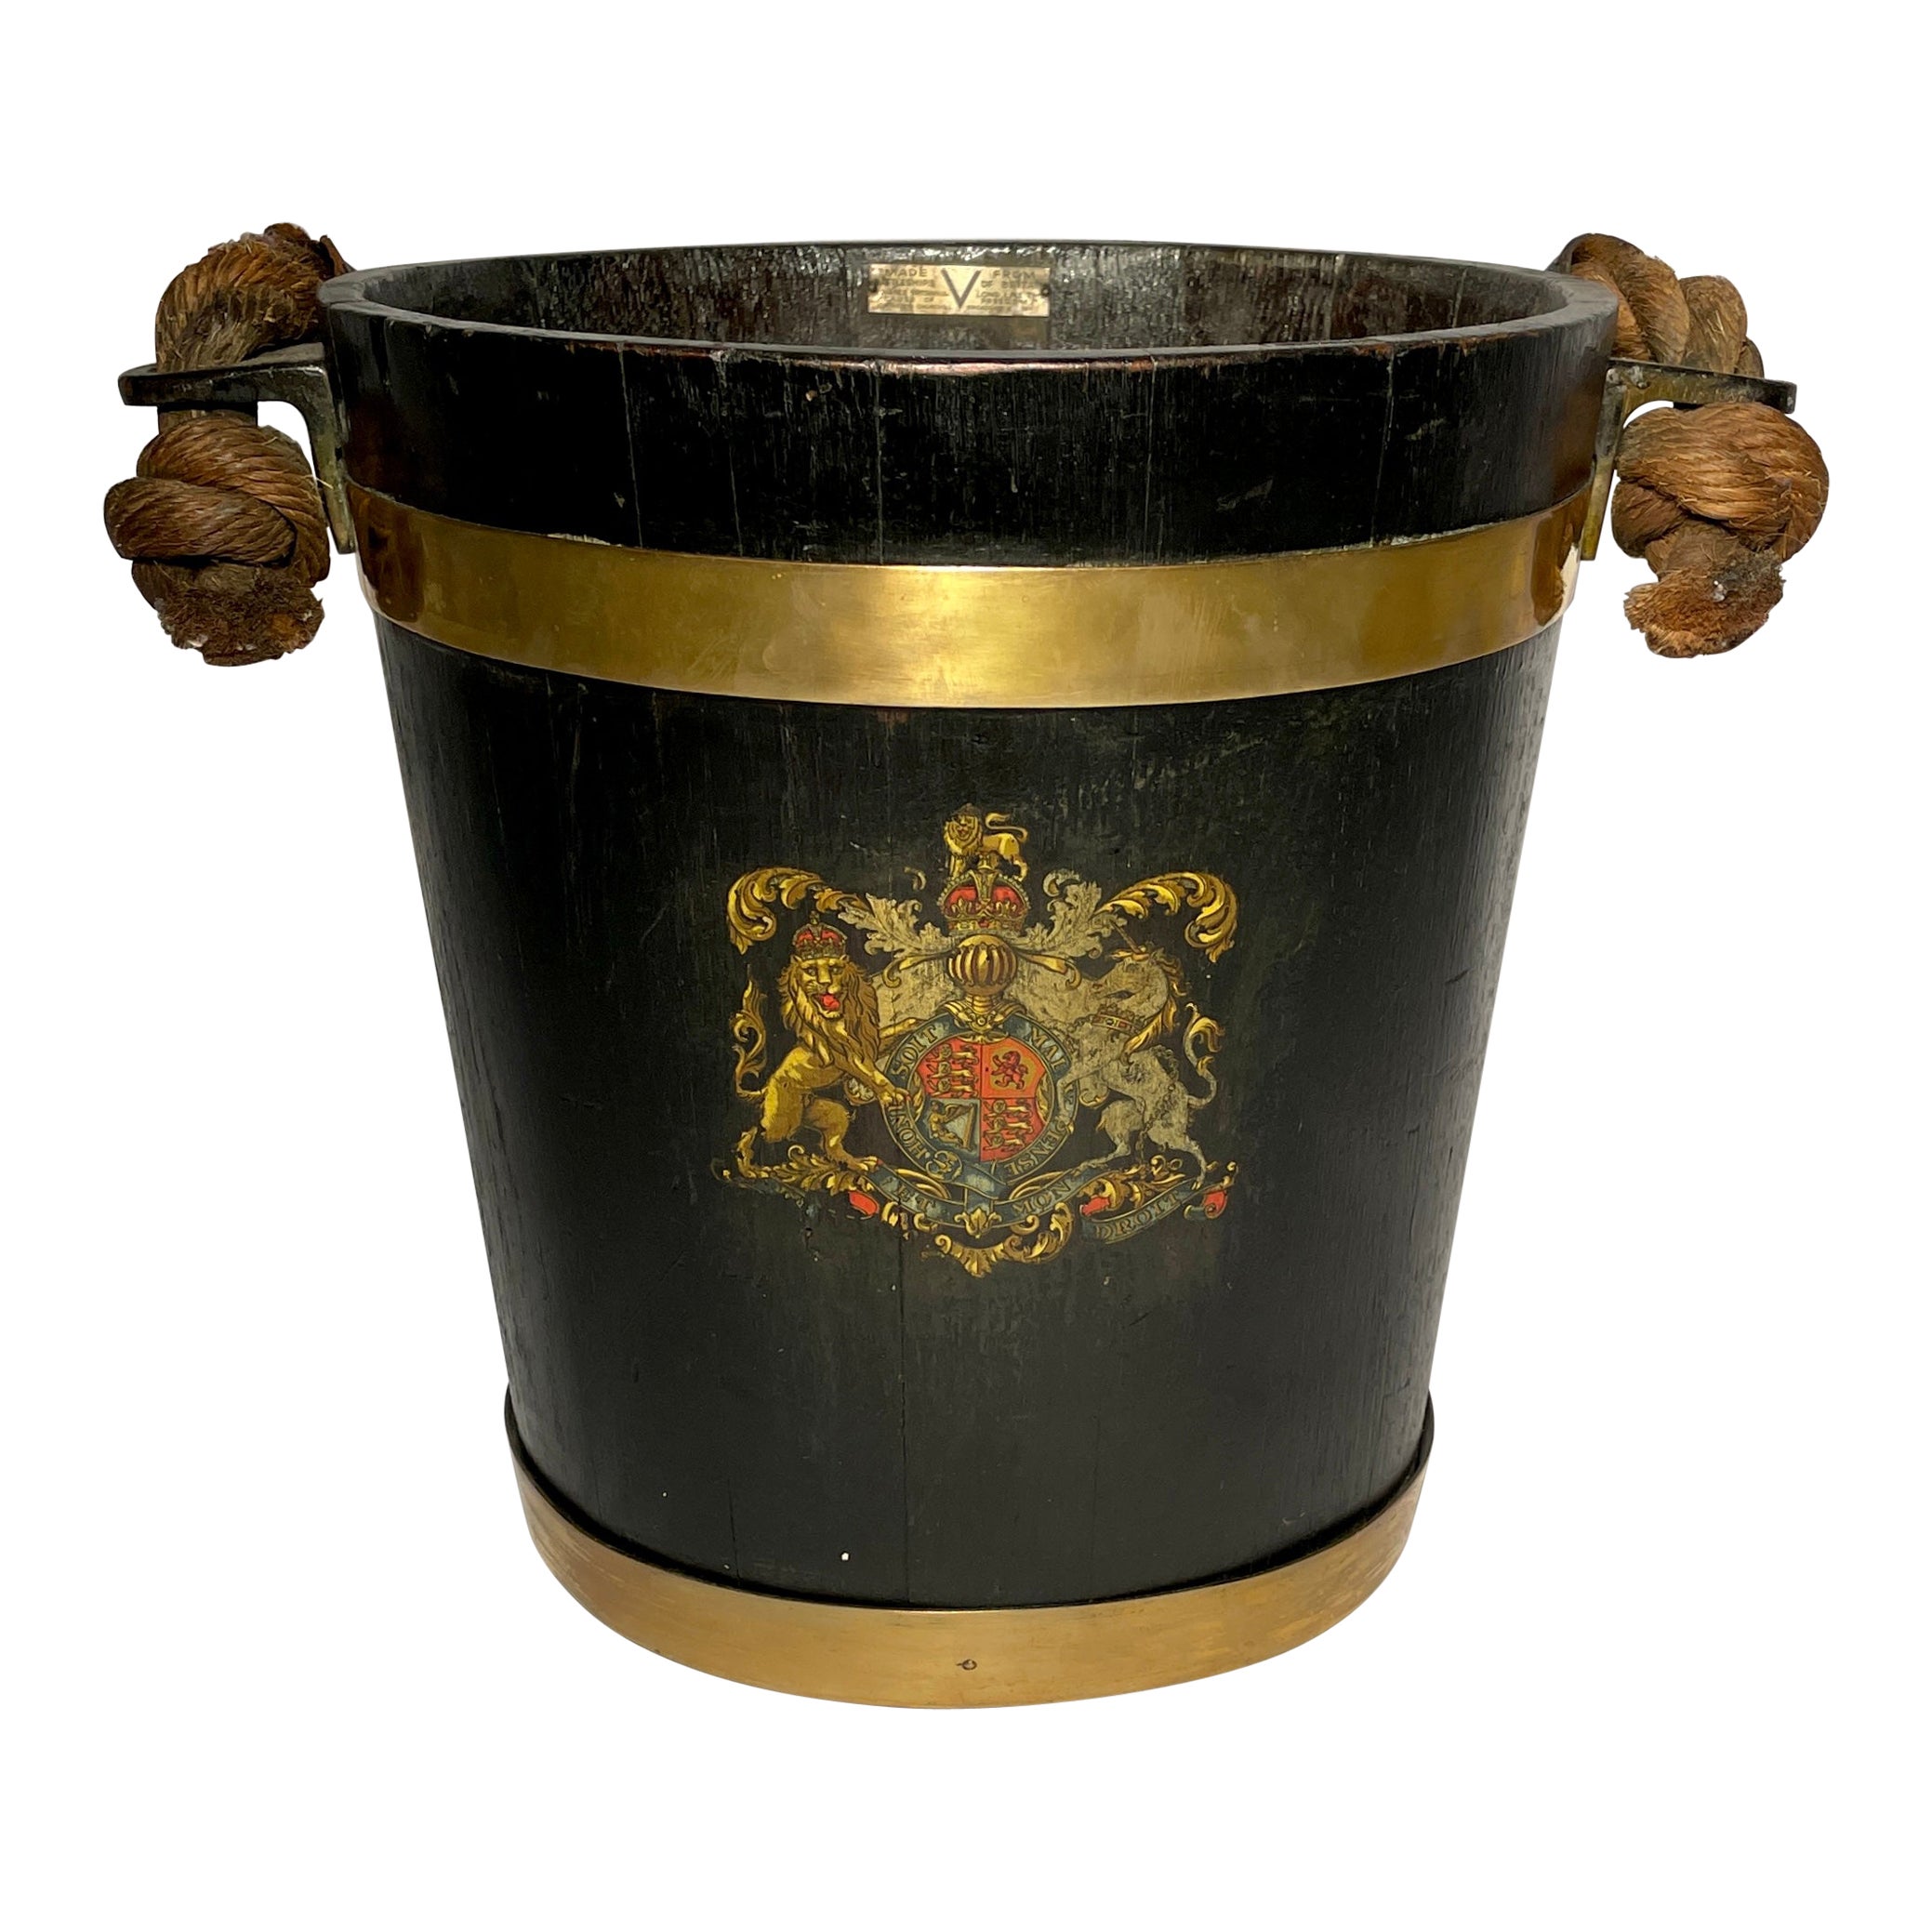 Antique English Oak and Brass Fire Bucket, City of London, circa 1840